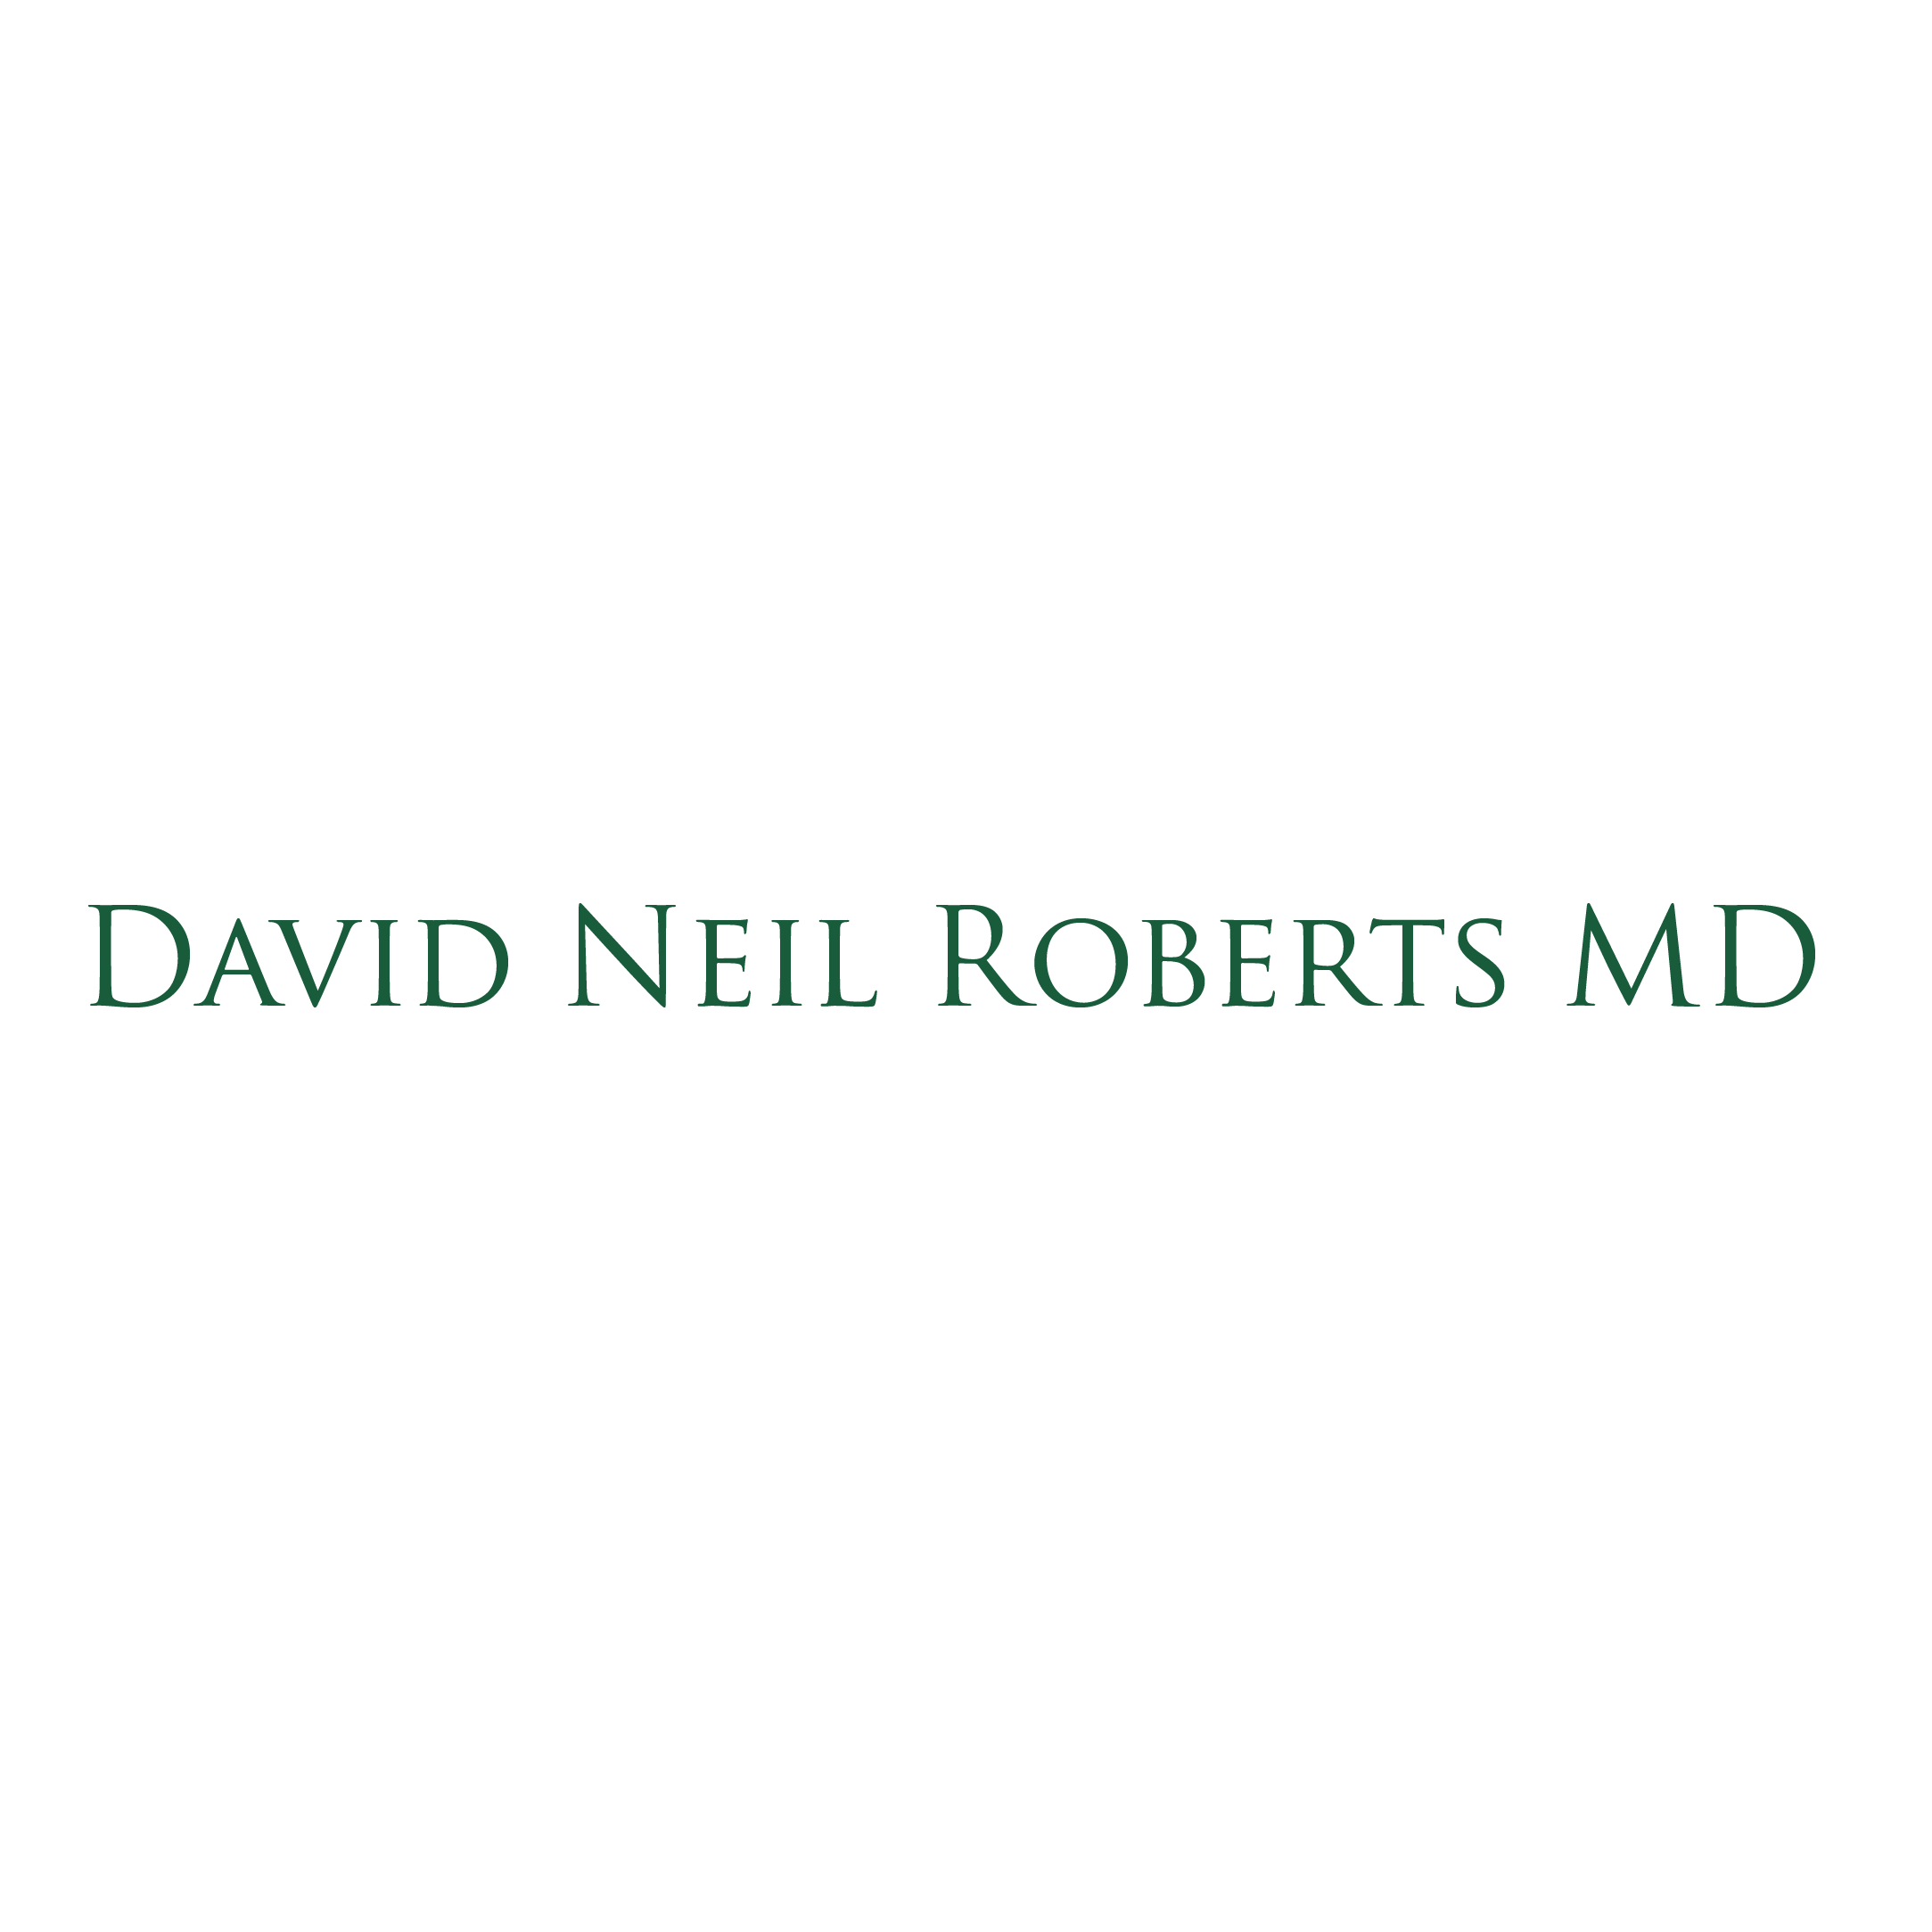 Dr. David Neil Roberts, M.D. Photo